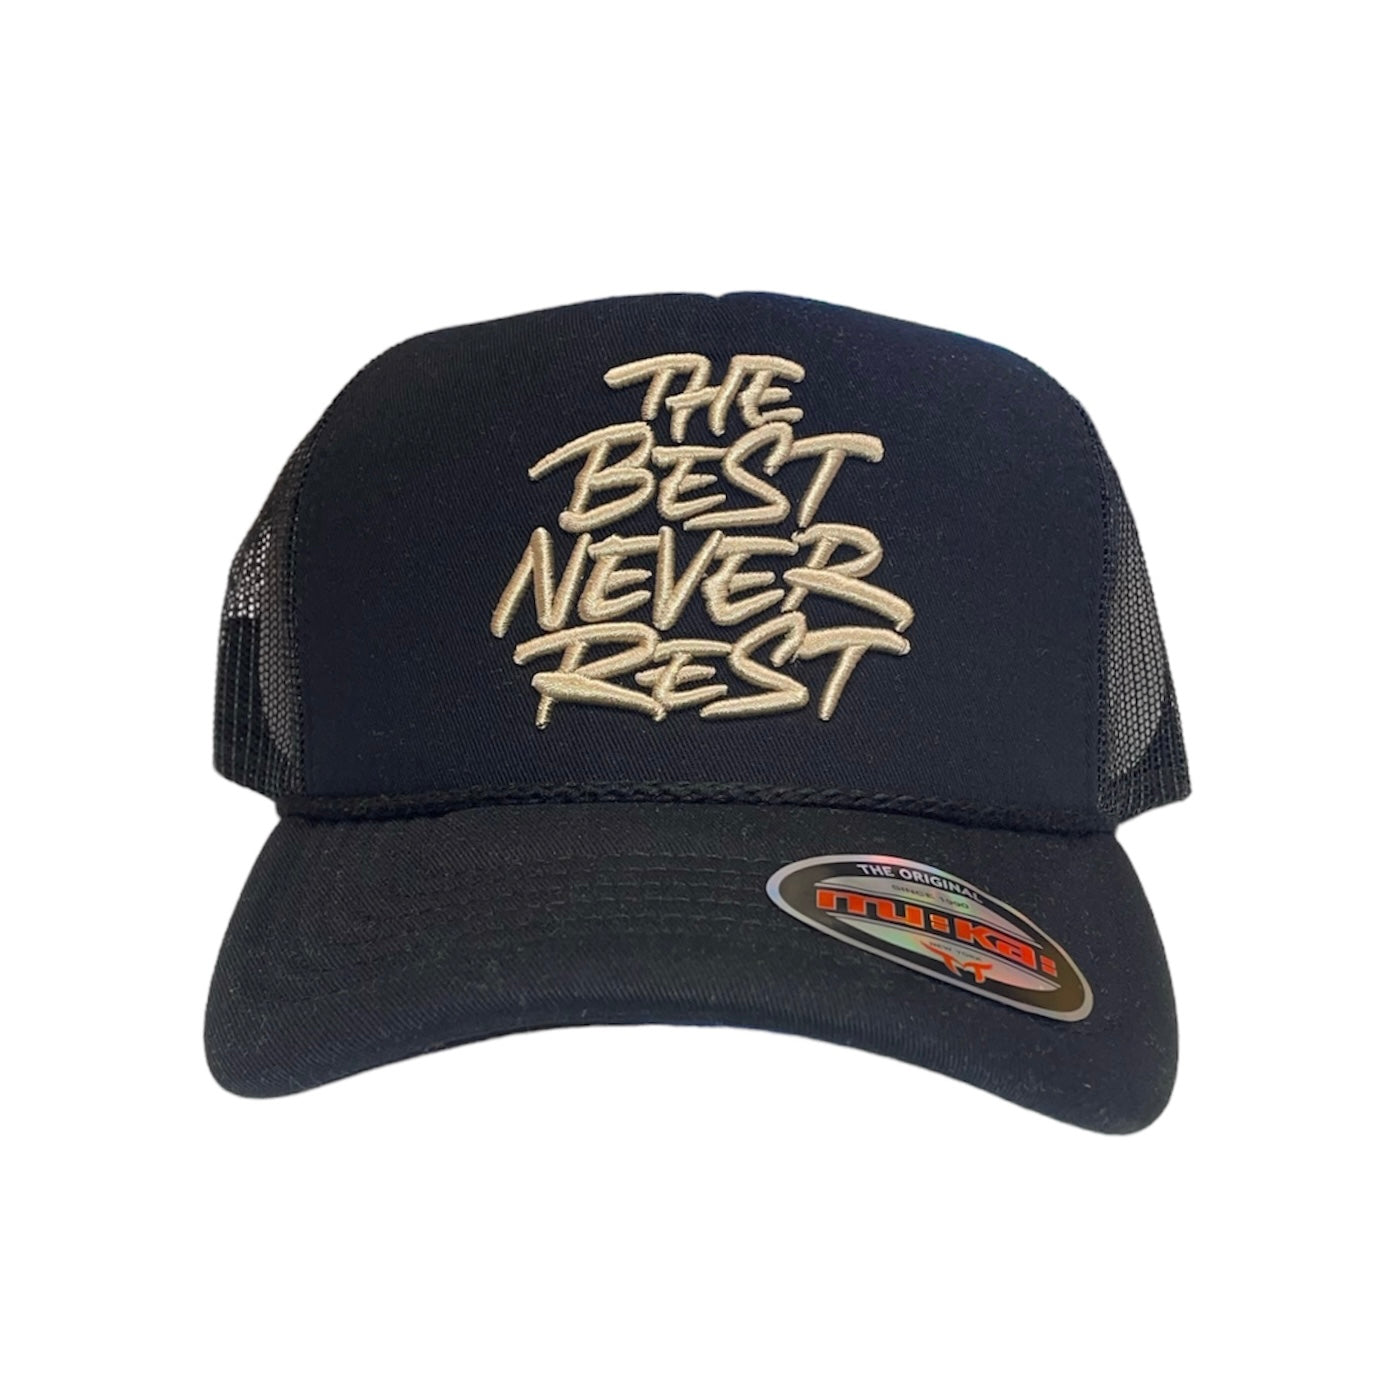 The Best Never Rest Trucker Hat